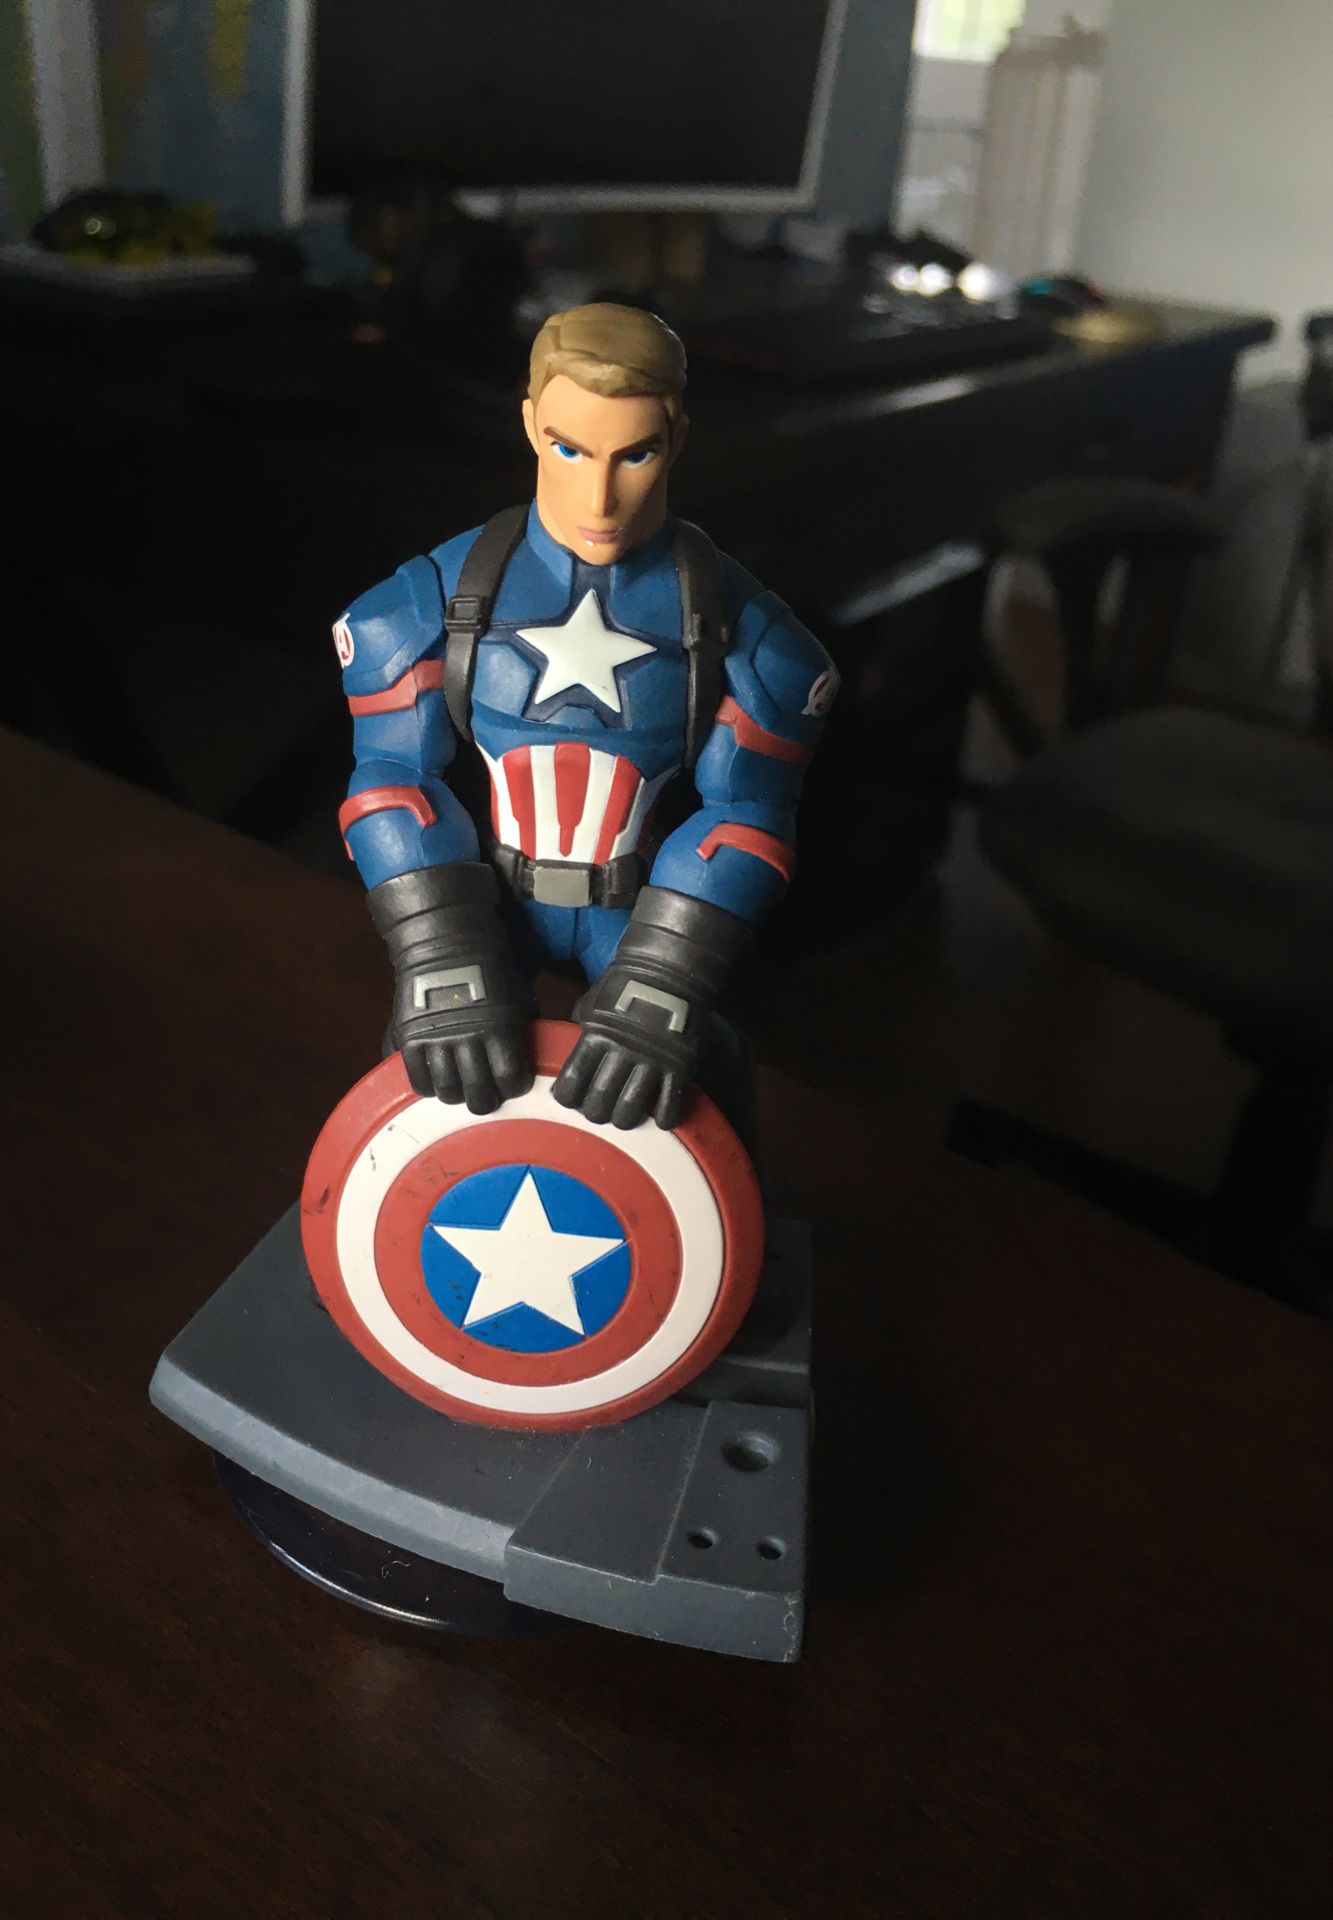 Captain America Disney infinity character